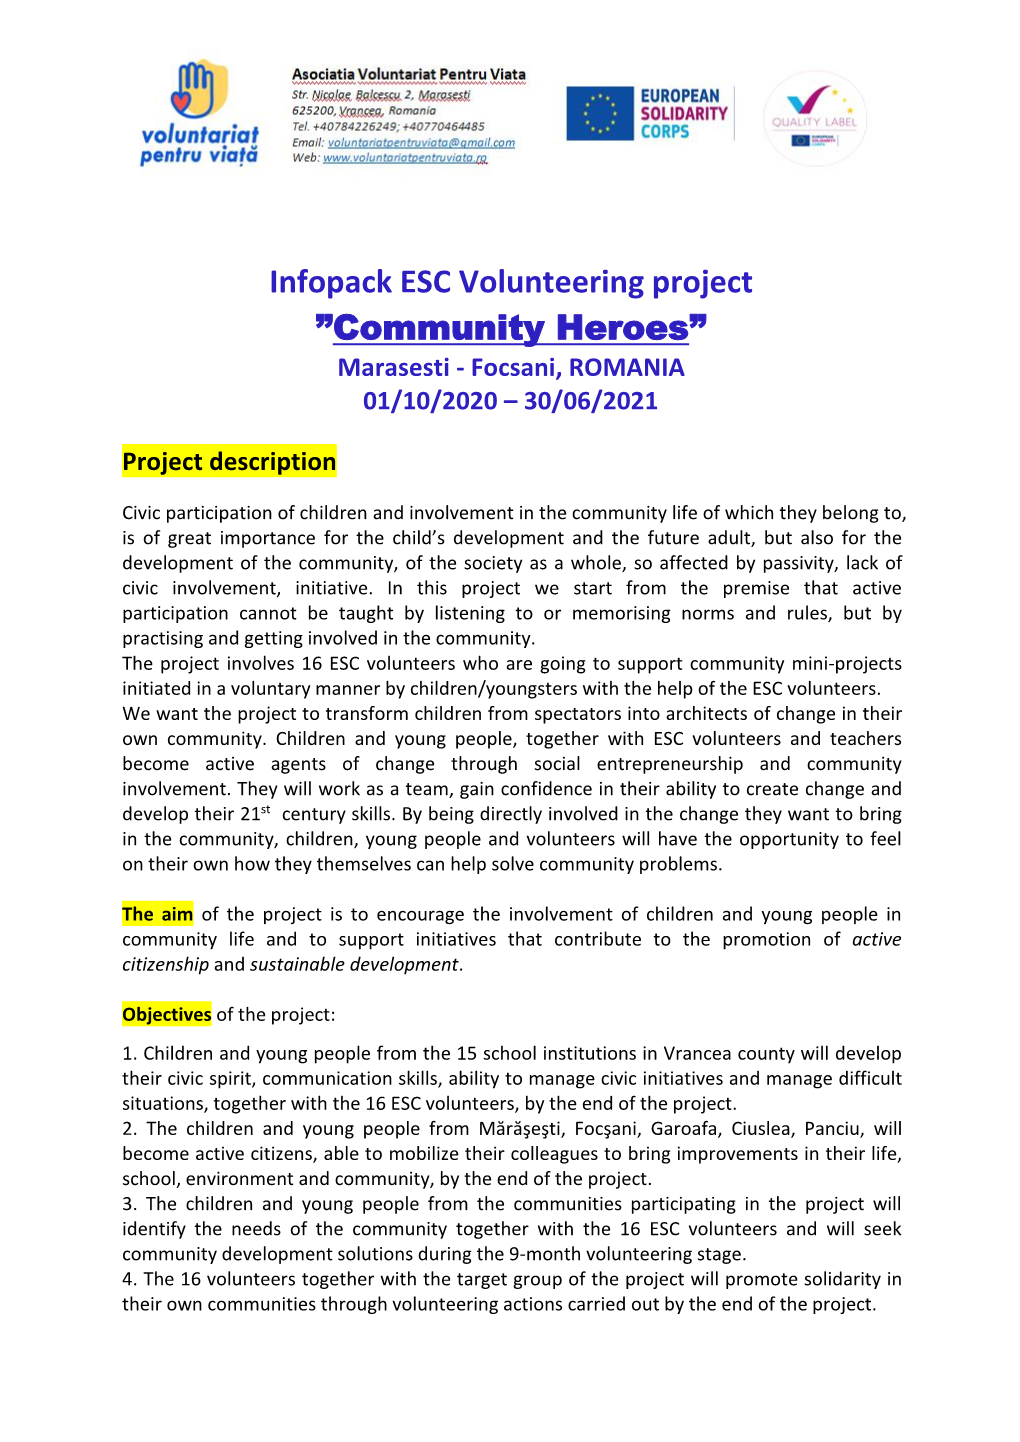 Infopack ESC Volunteering Project ”Community Heroes” Marasesti - Focsani, ROMANIA 01/10/2020 – 30/06/2021